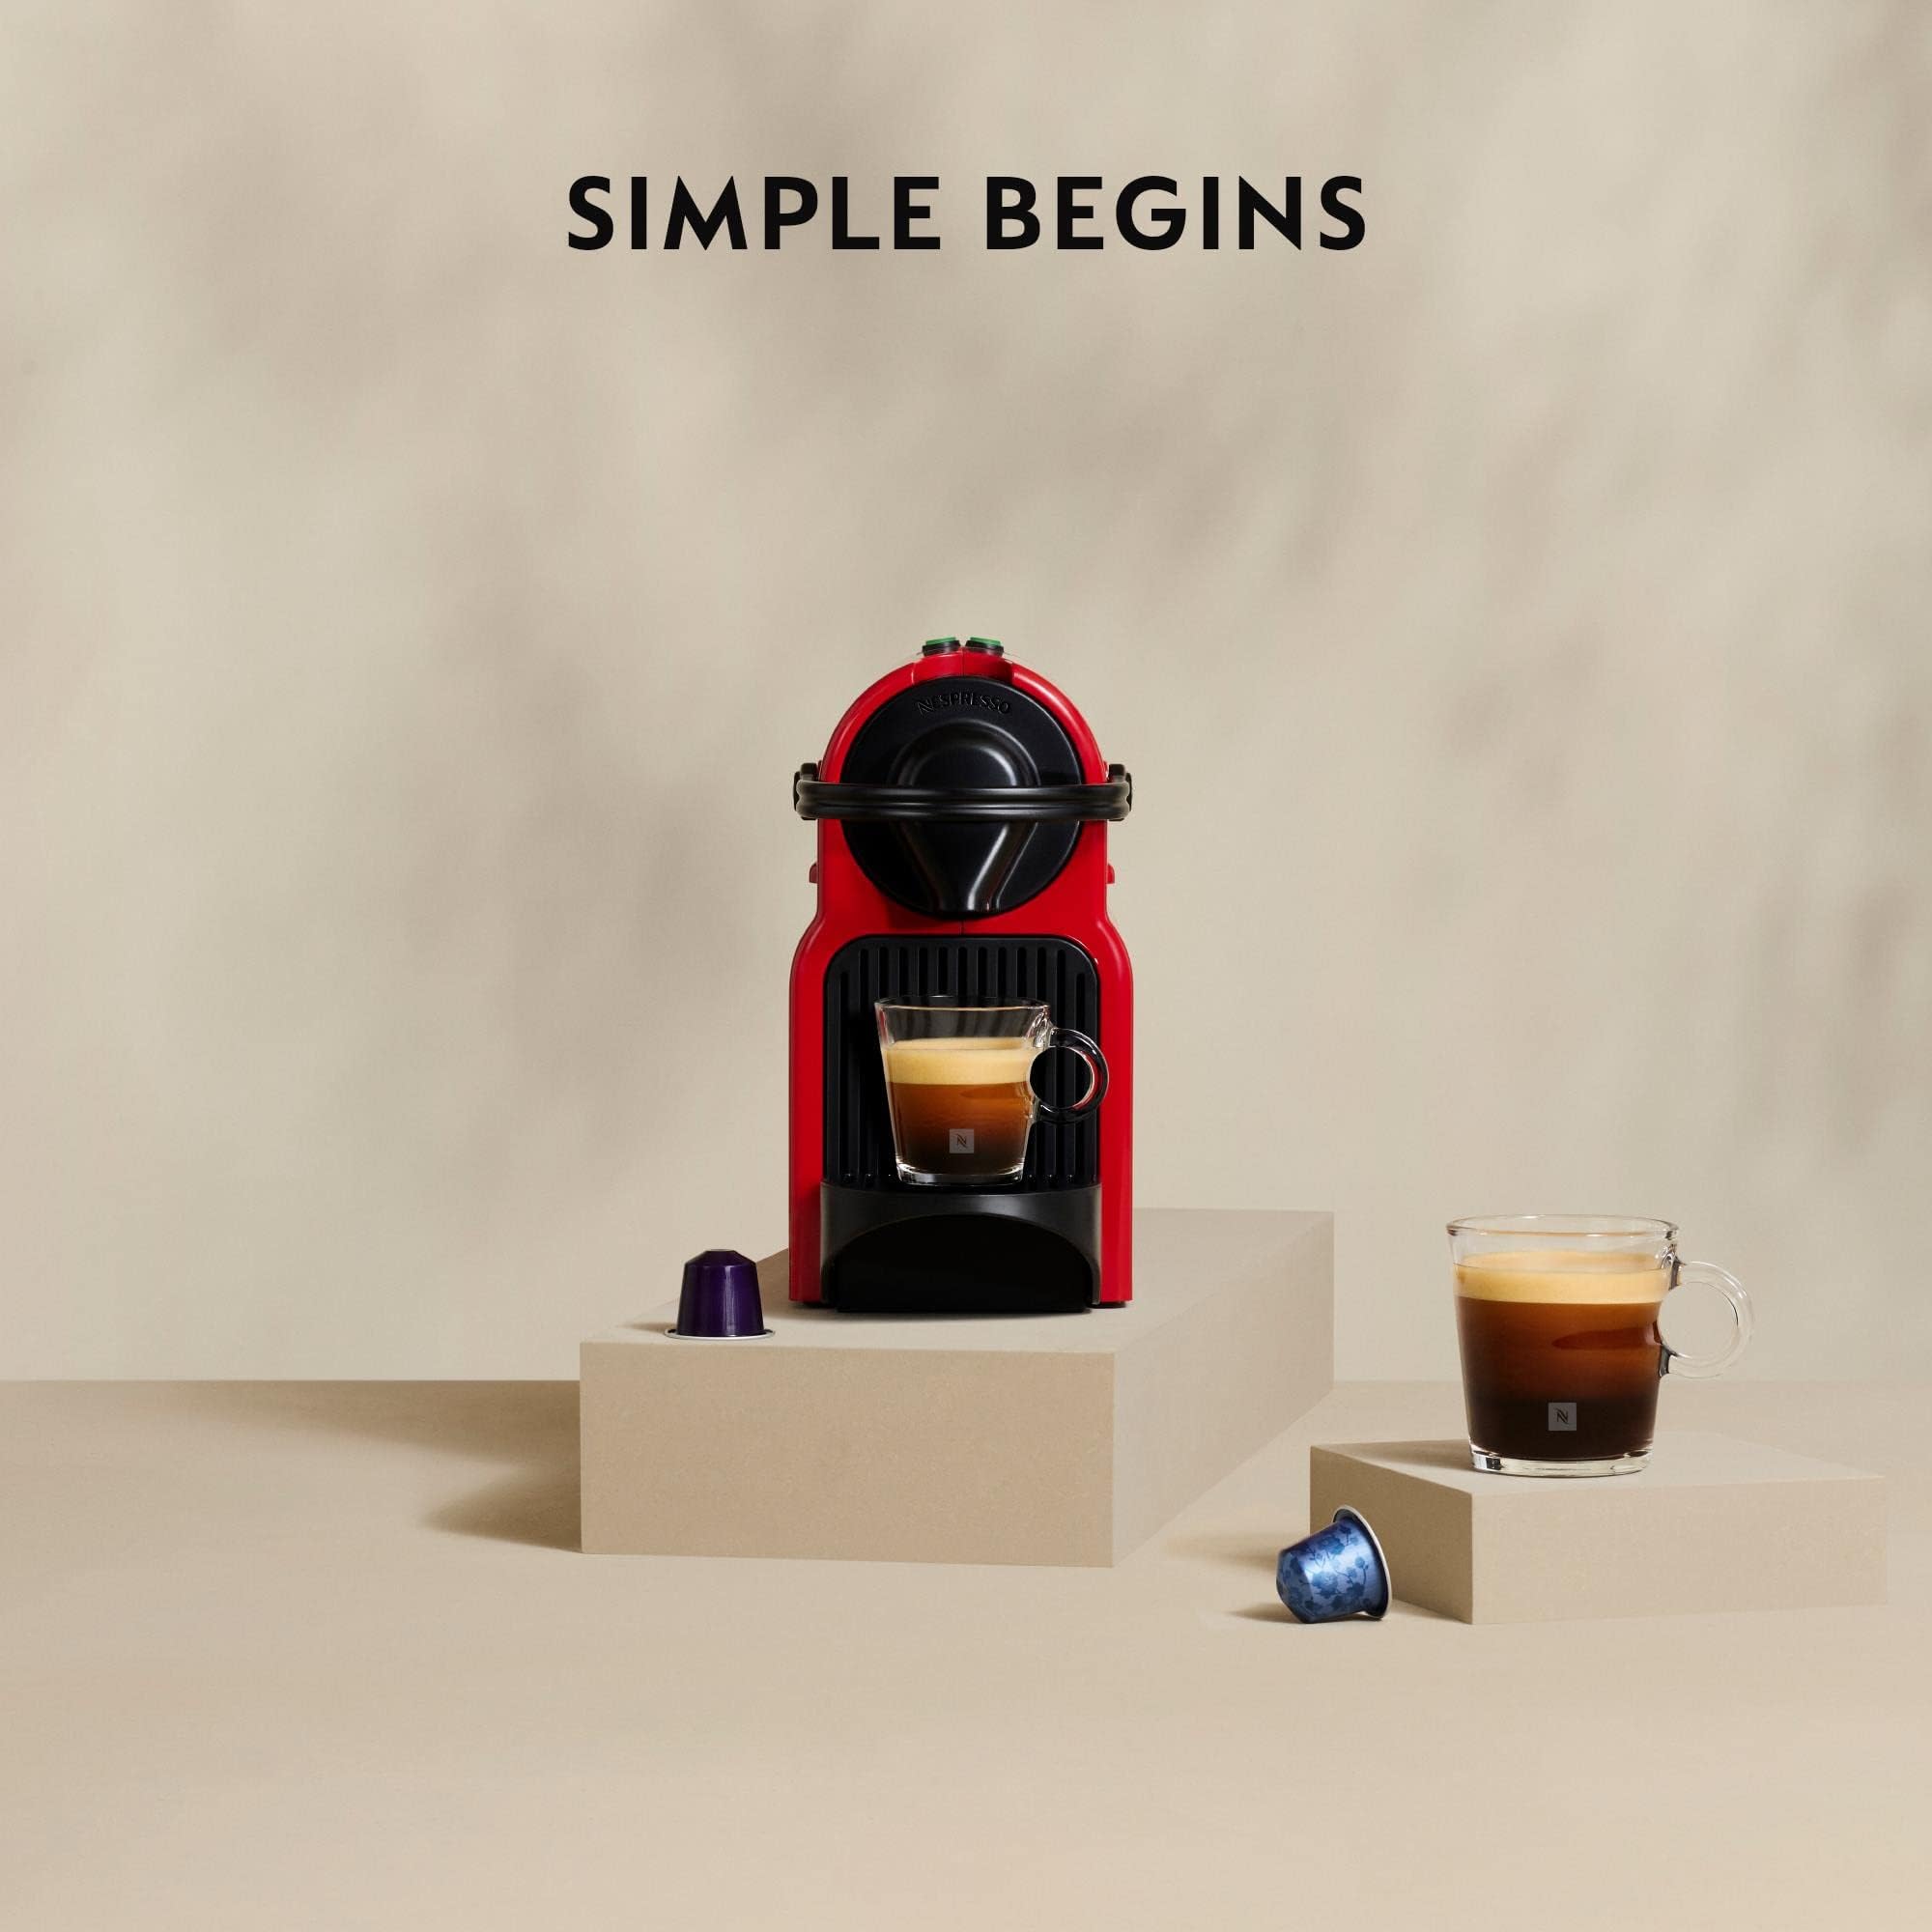 NESPRESSO Inissia C40 Red Coffee Machine - UAE Version